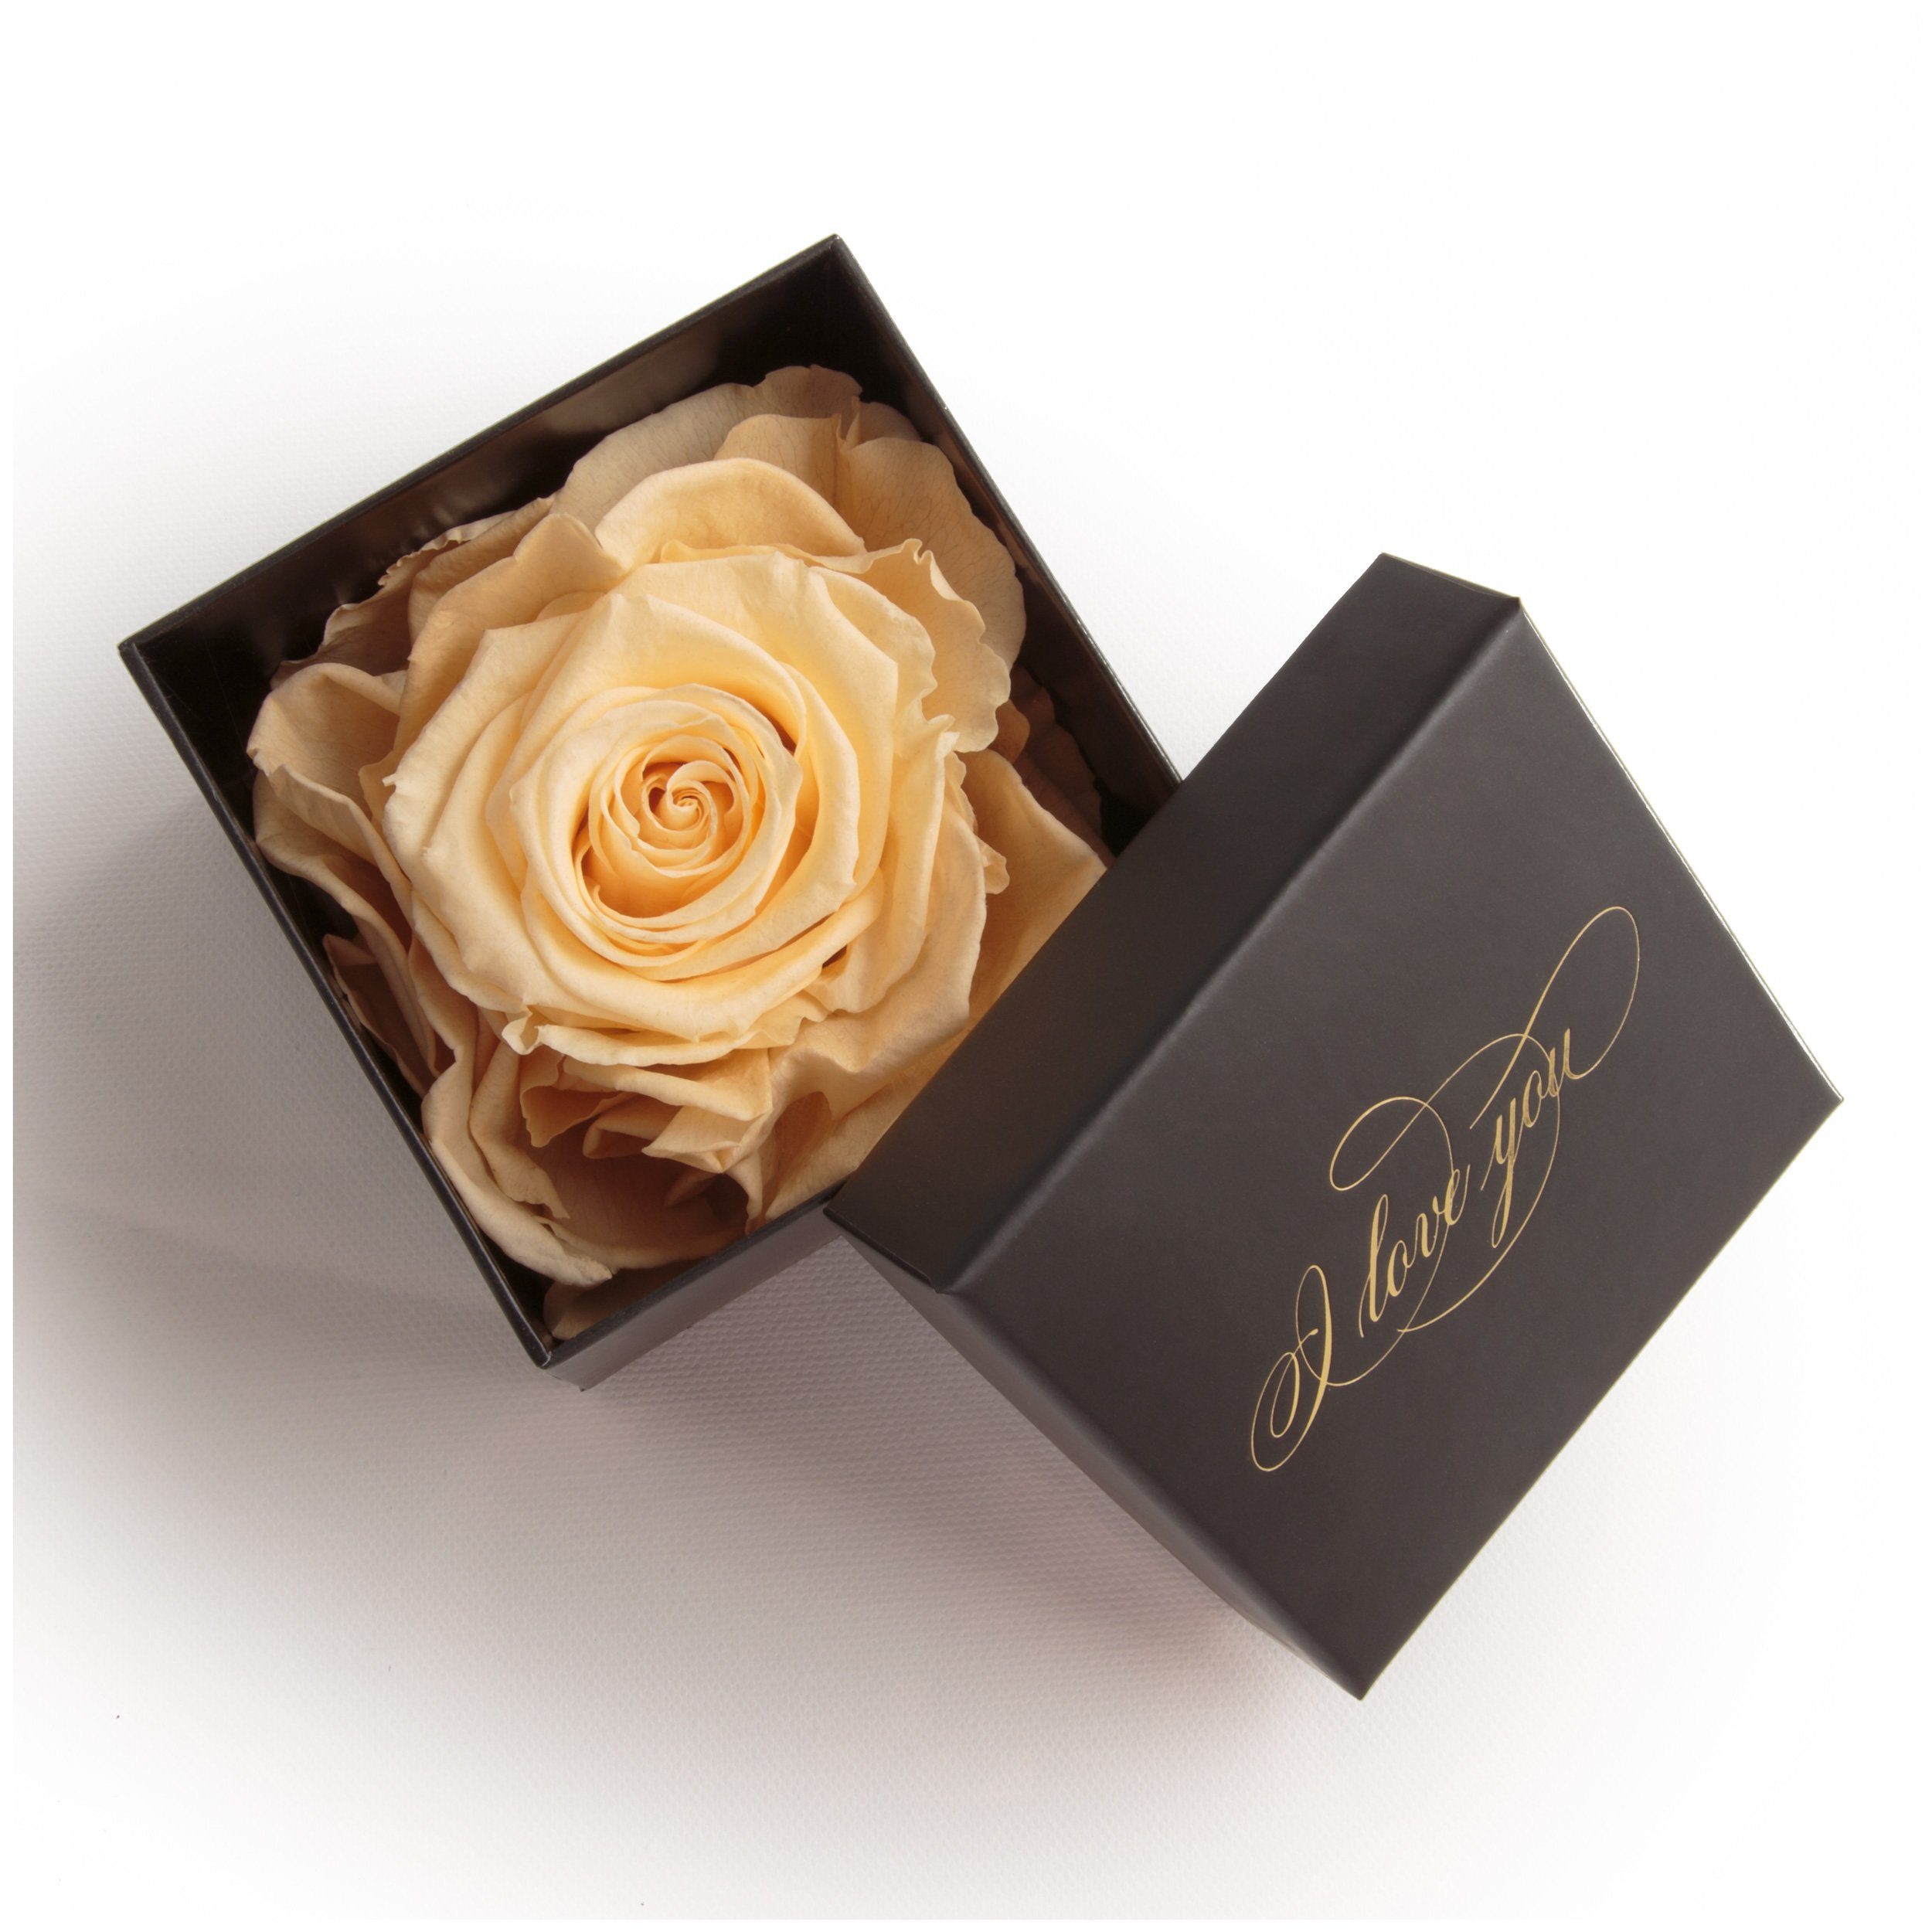 Kunstblume Infinity Rose Box I Love You Geschenk Idee Liebesbeweis Rose, ROSEMARIE SCHULZ Heidelberg, Höhe 6 cm, Echte Rose konserviert Beige